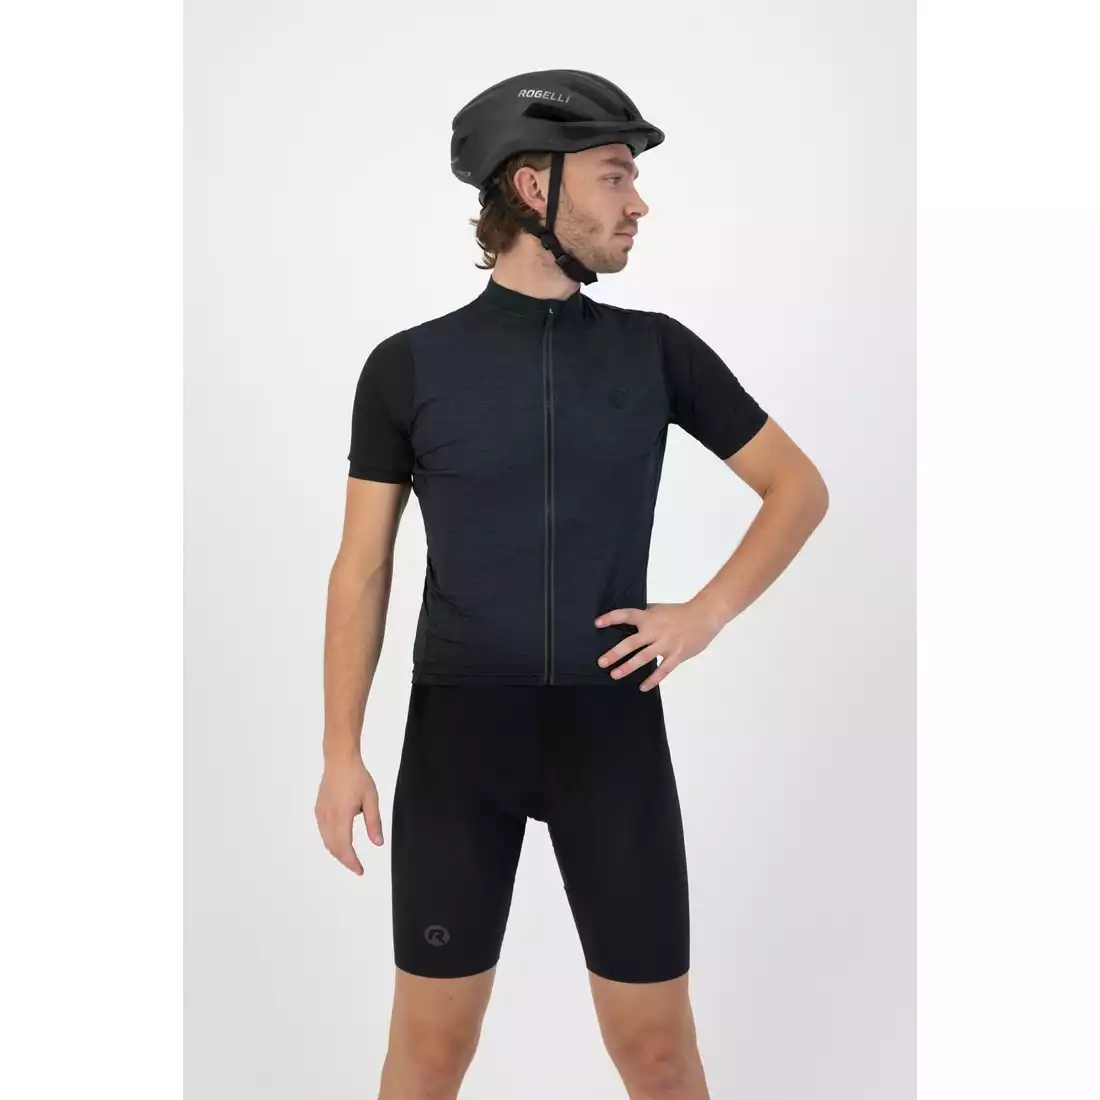 Rogelli FEROX 2 MTB bicycle helmet, dark gray